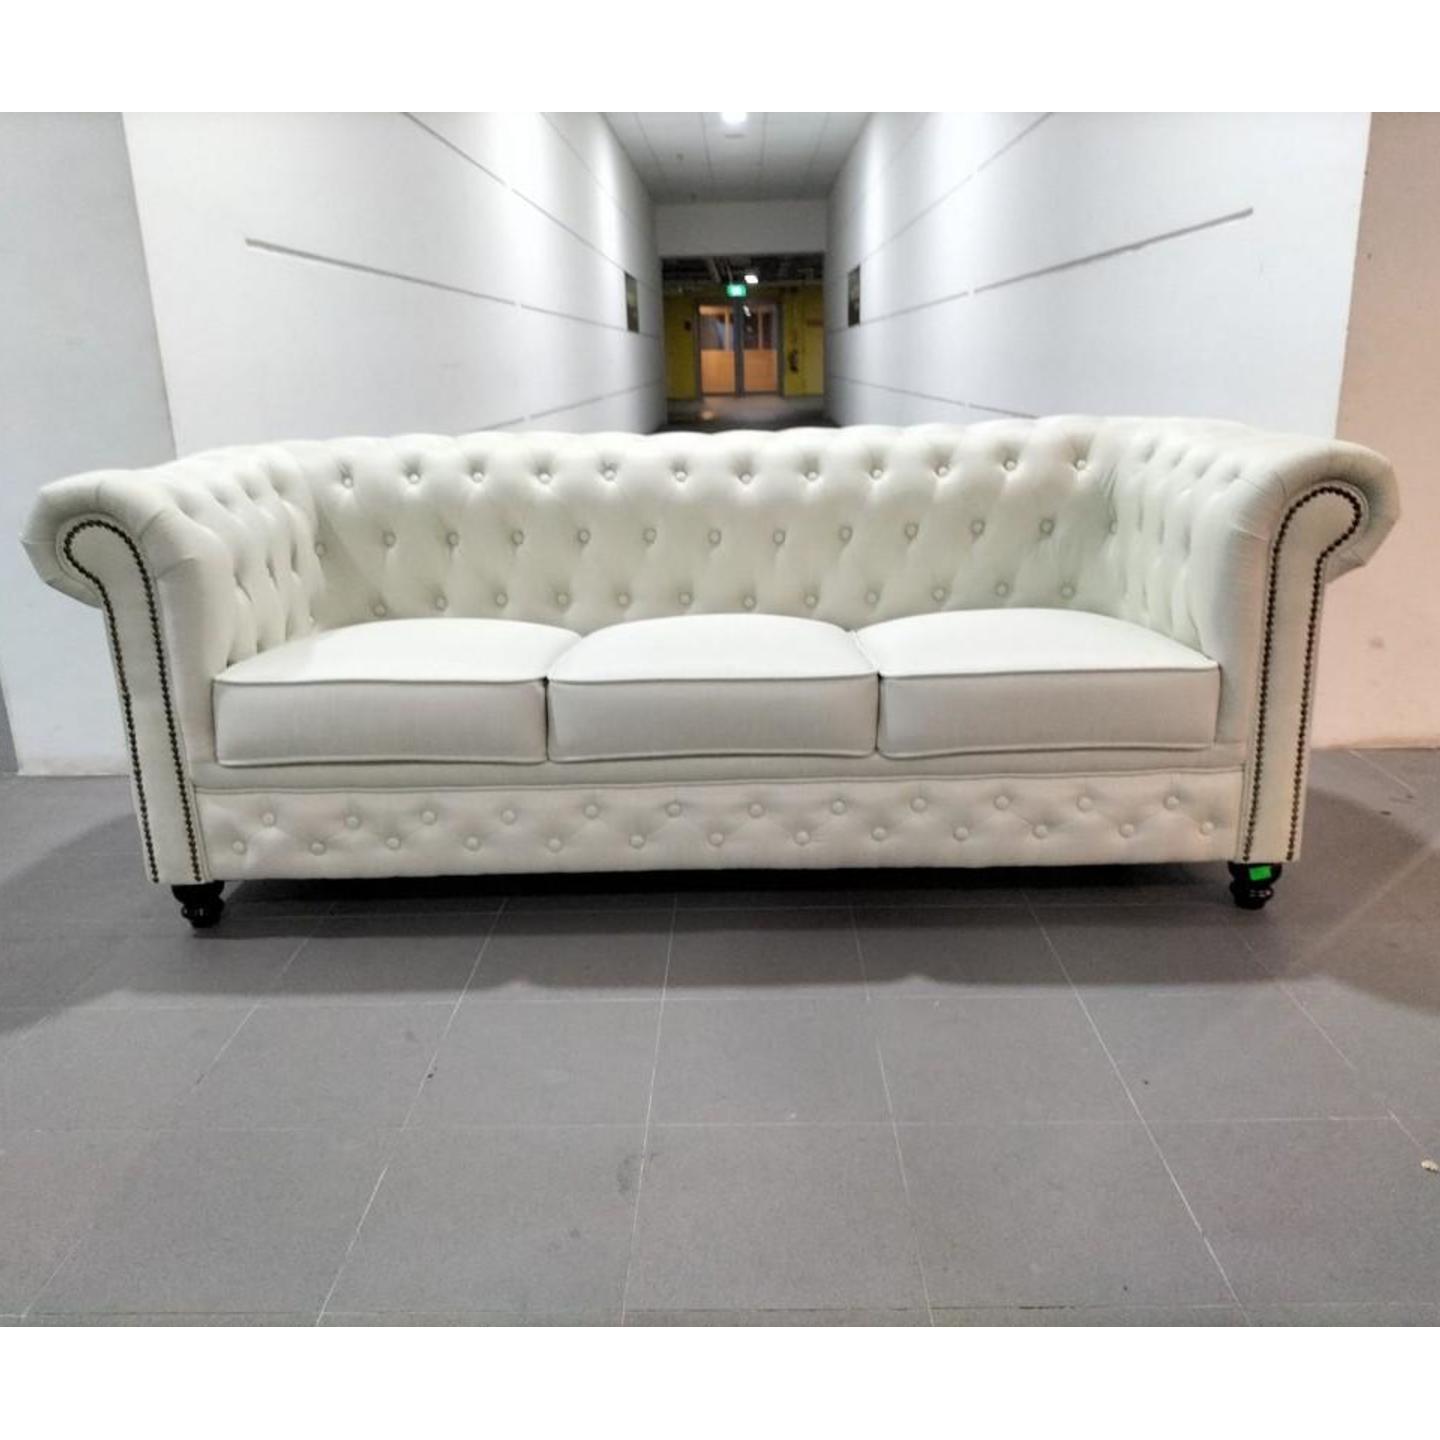 SALVADORE X 3 Seater Chesterfield Sofa in LIGHT CREAM FABRIC